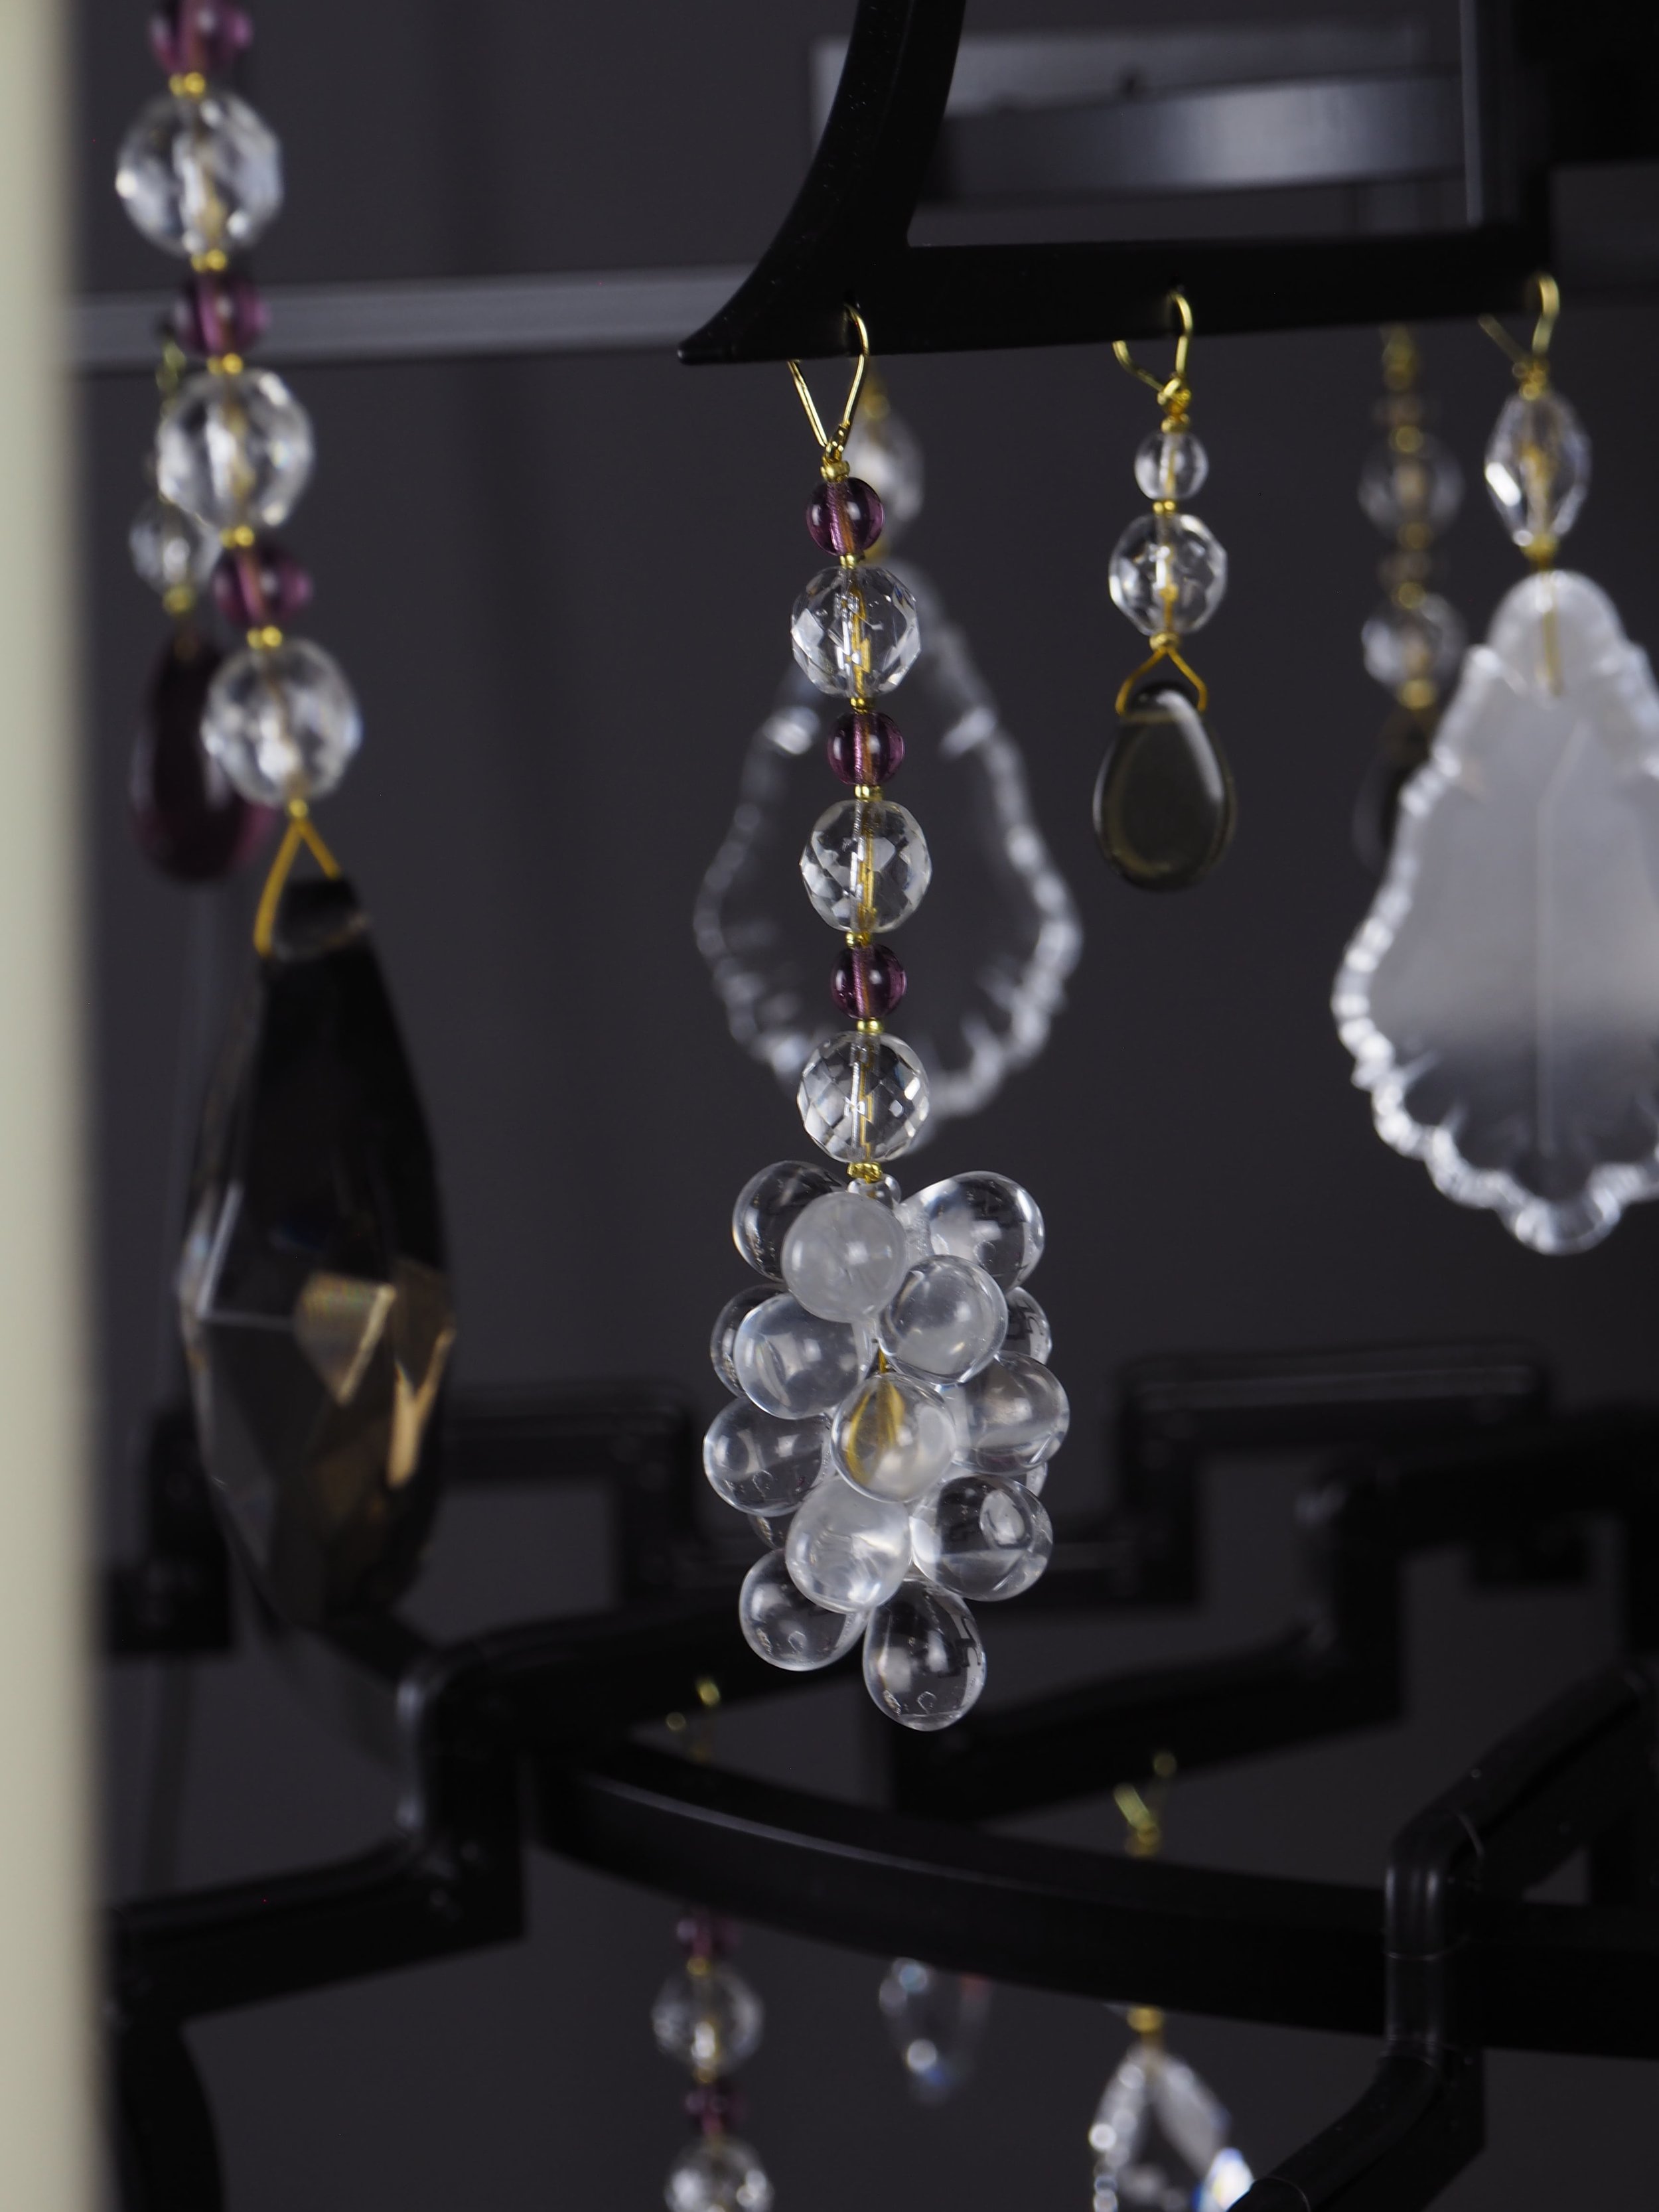 chanel-chandelier-details-3.JPG